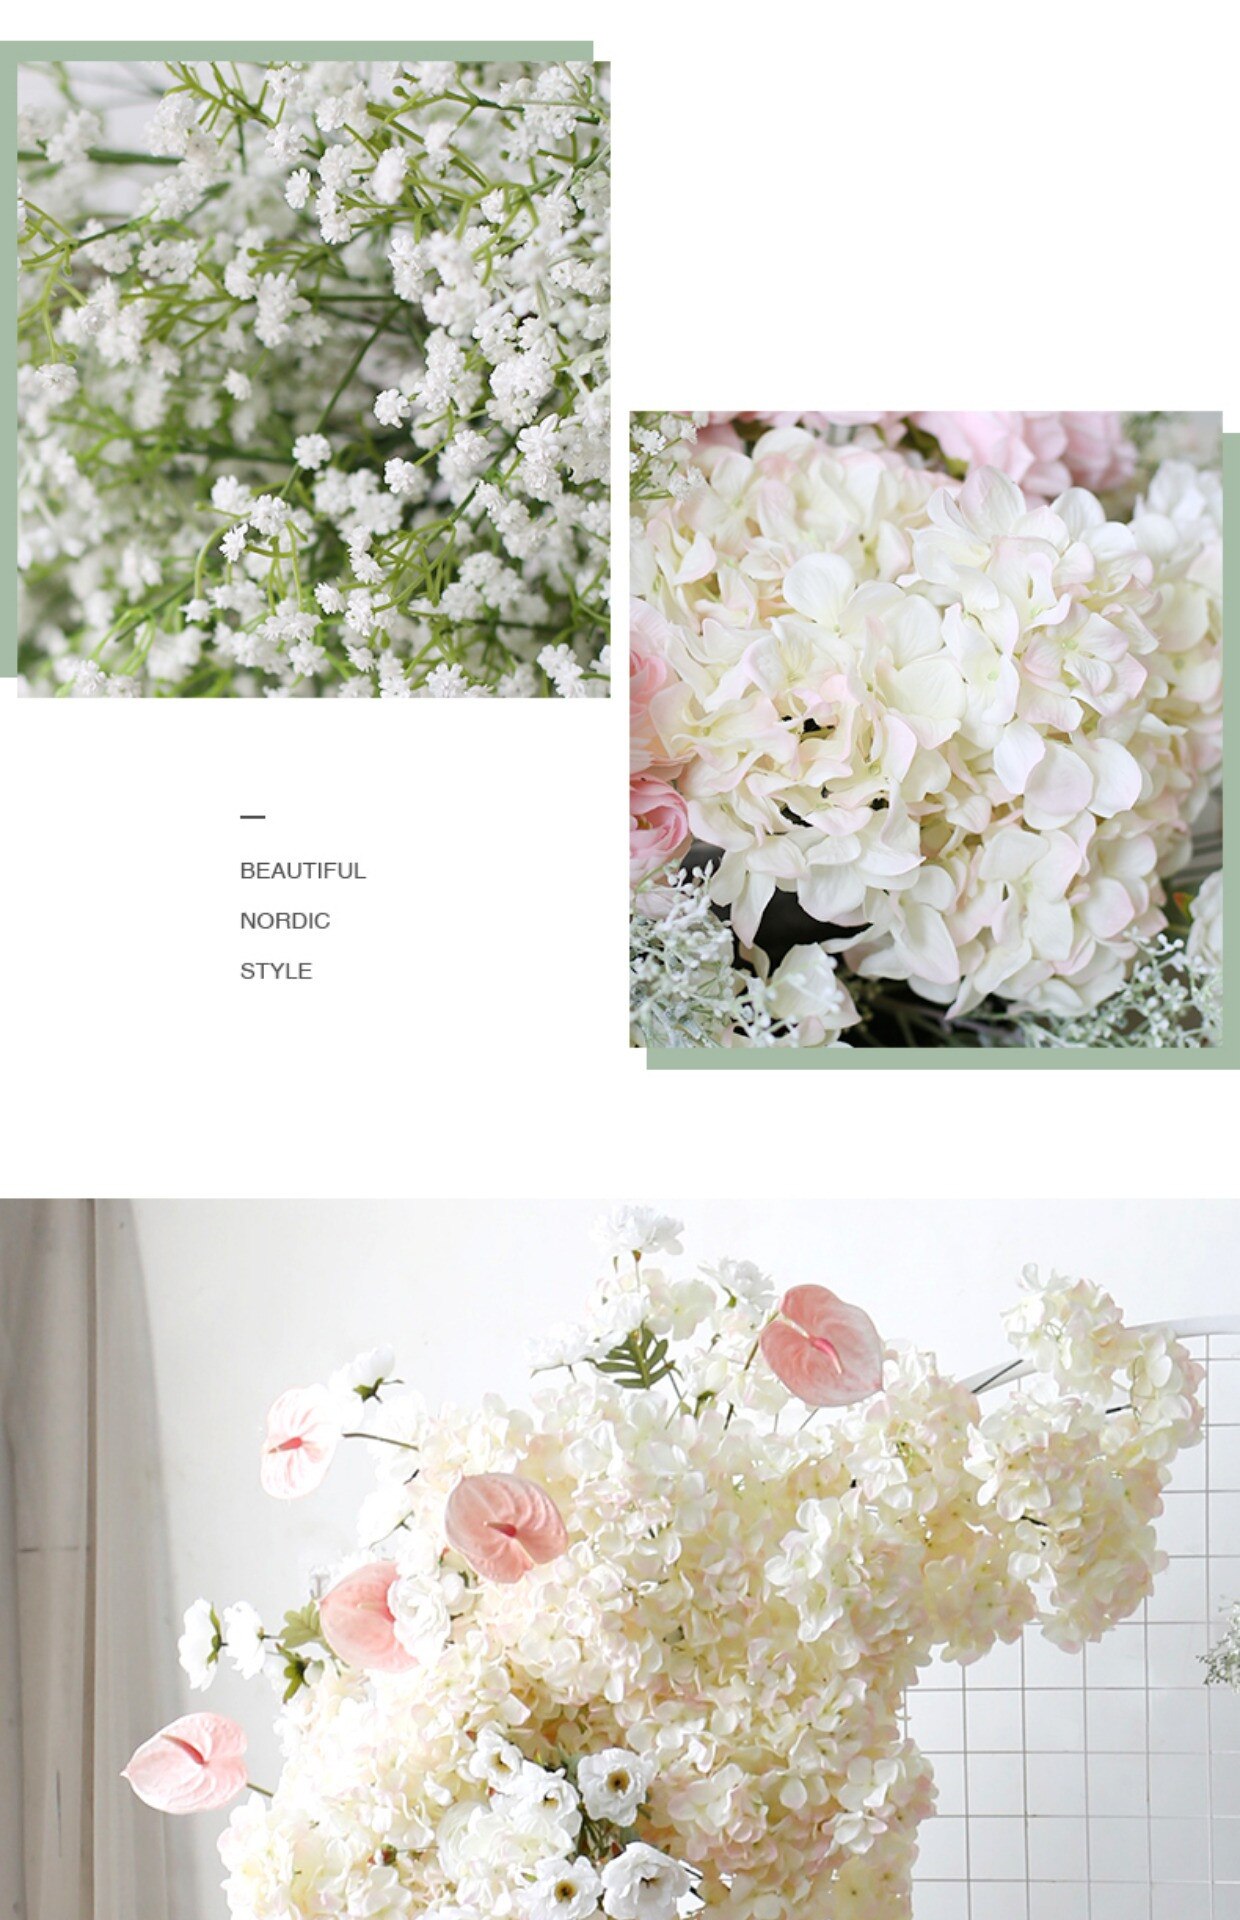 burgady flower arrangements4